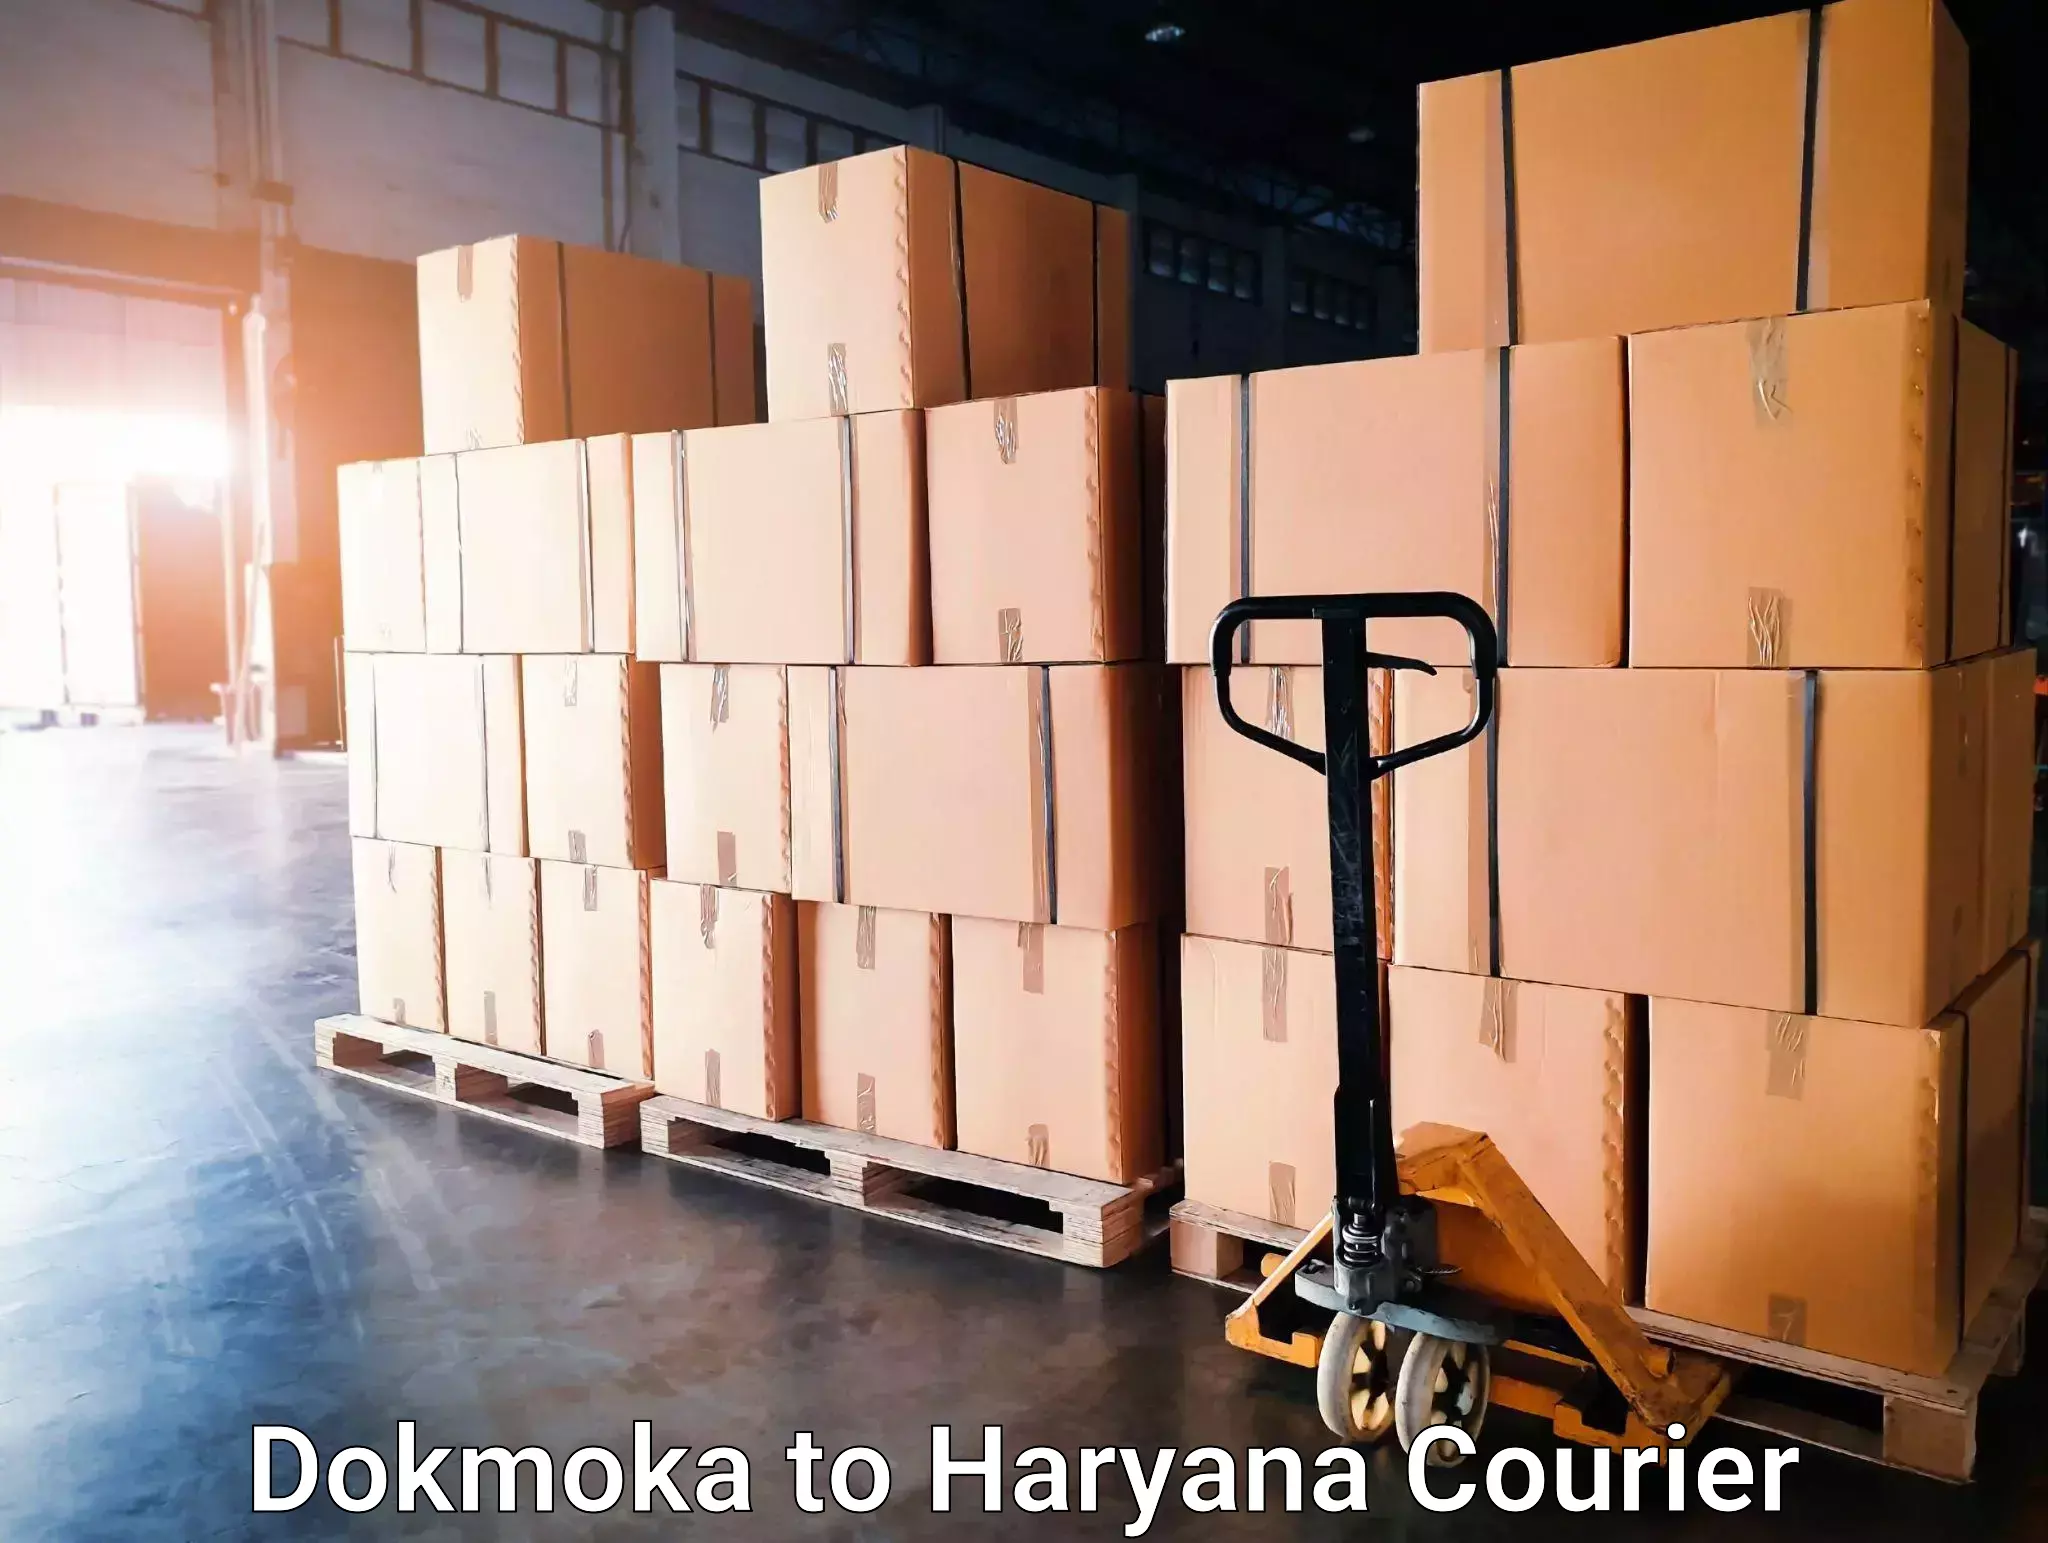 Courier service comparison Dokmoka to Nuh